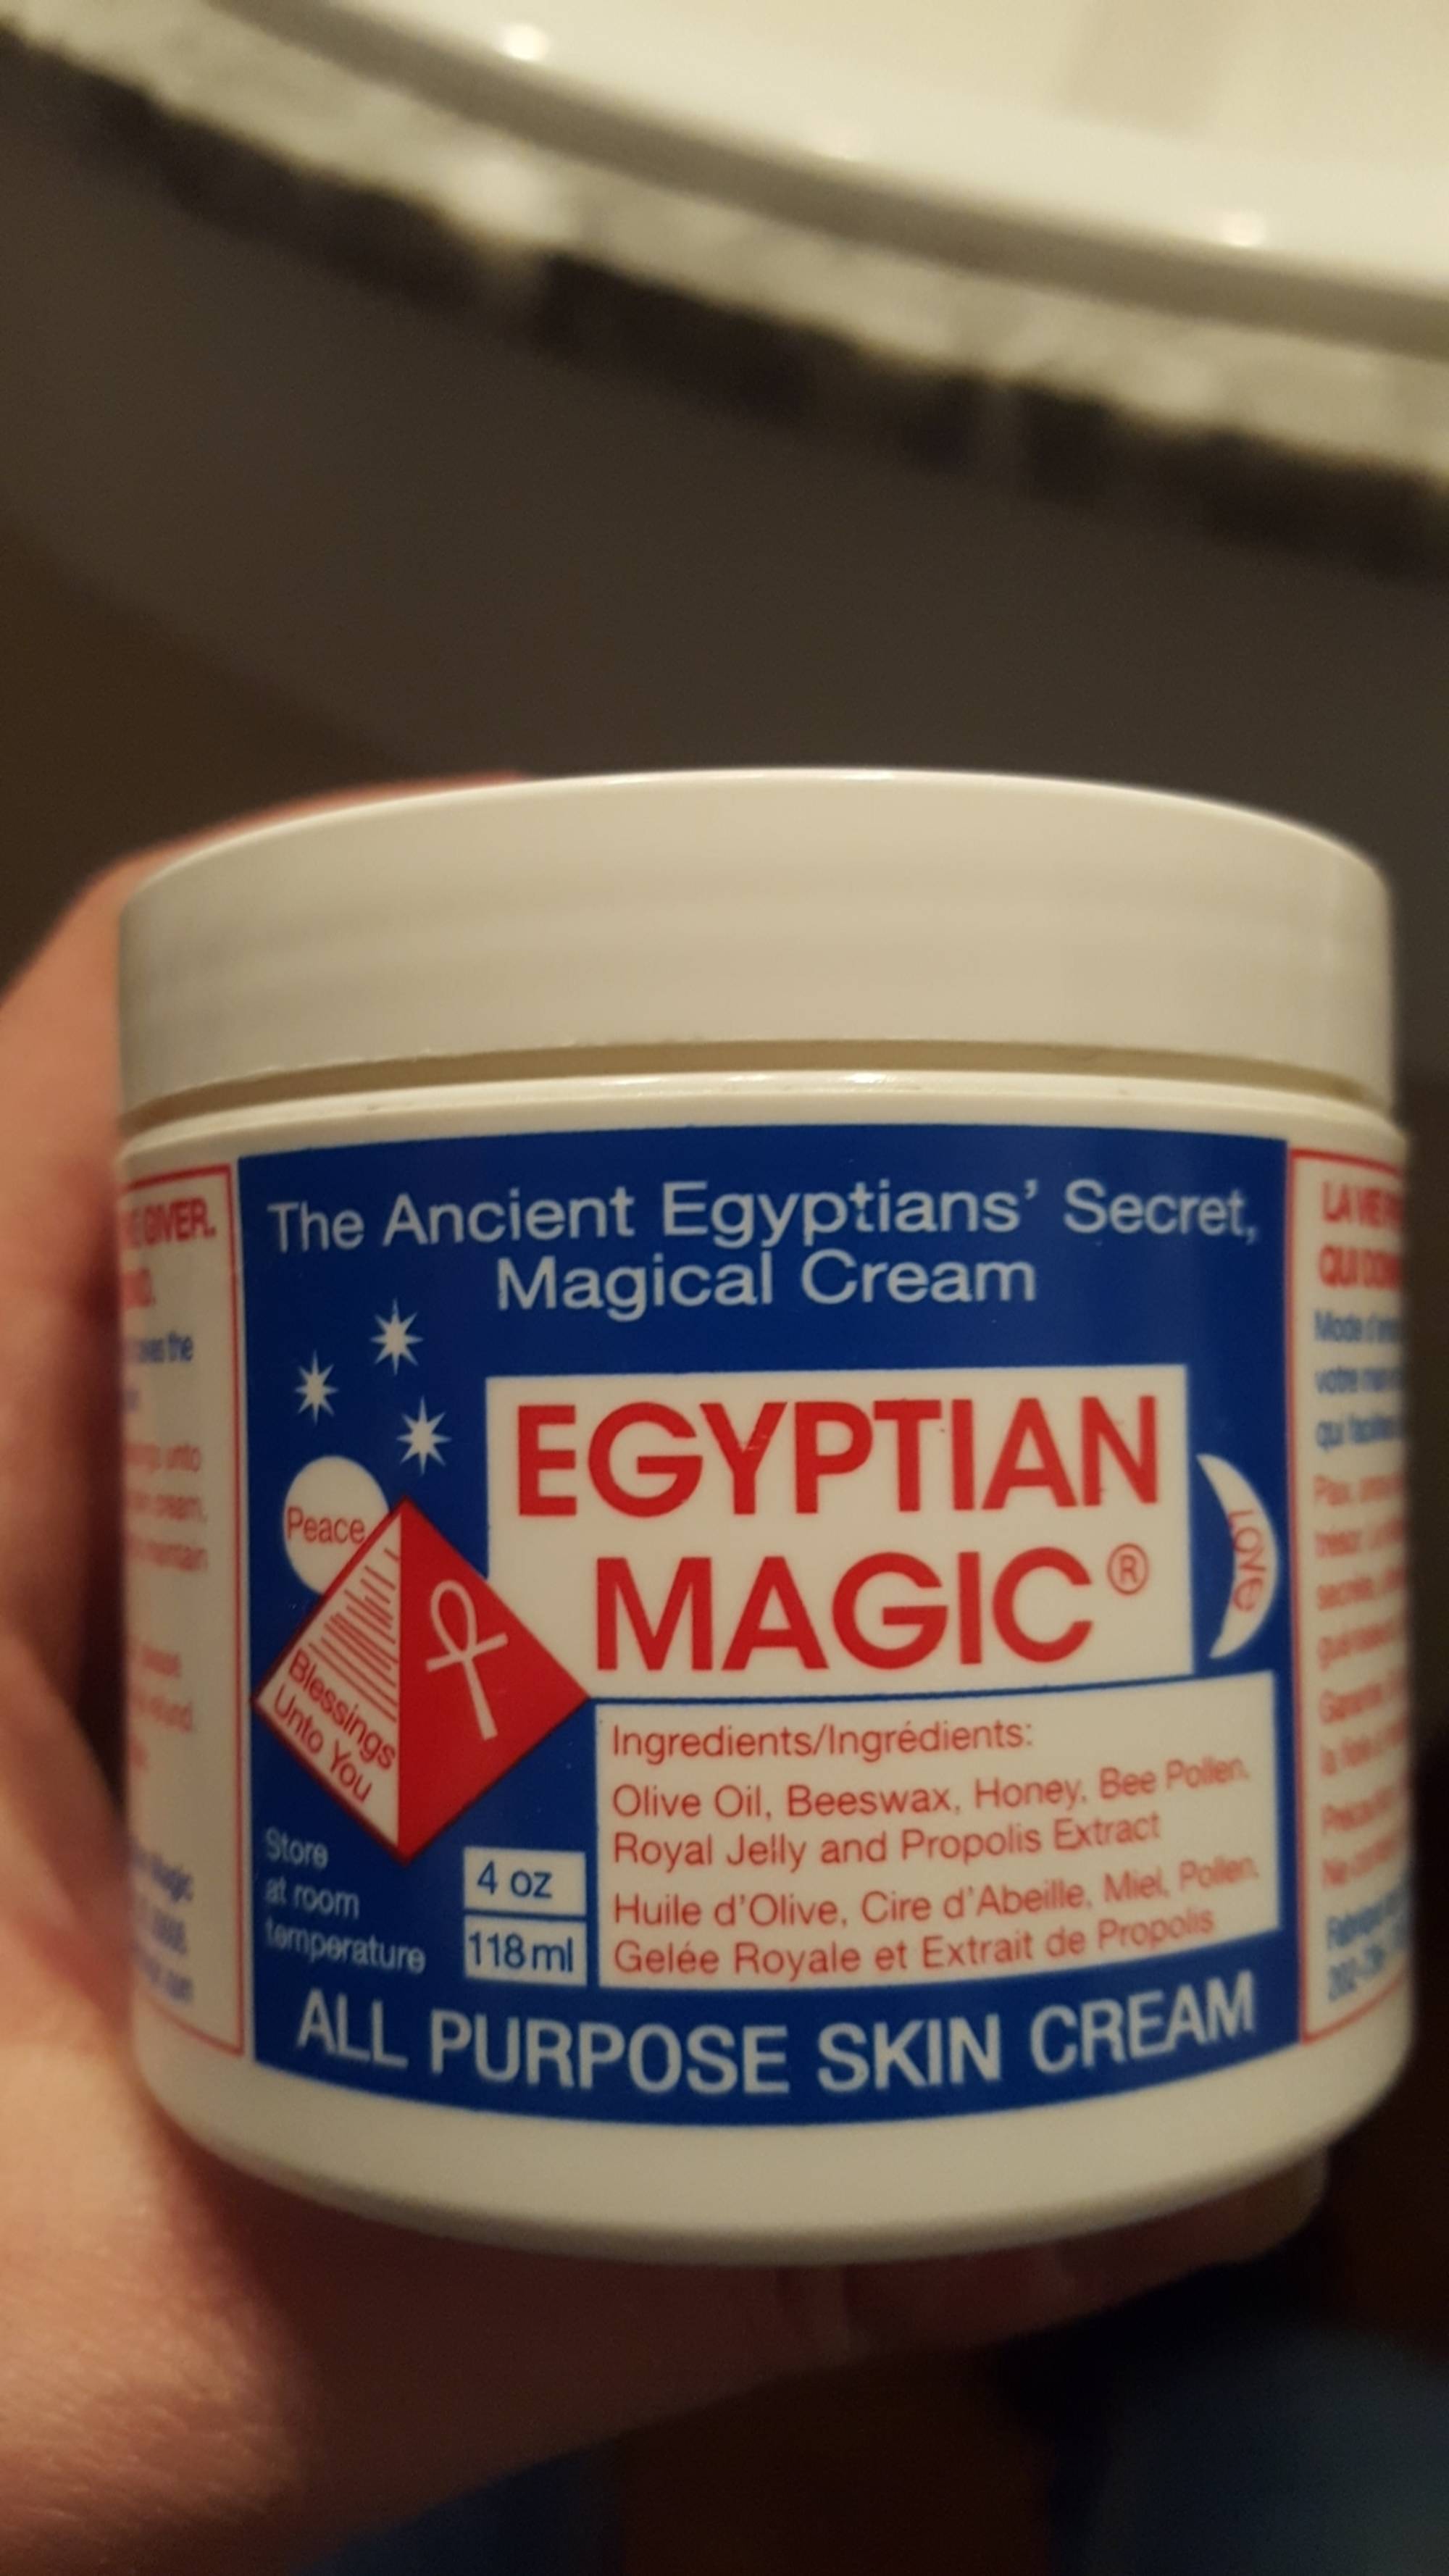 EGYPTIAN MAGIC - All purpose skin cream